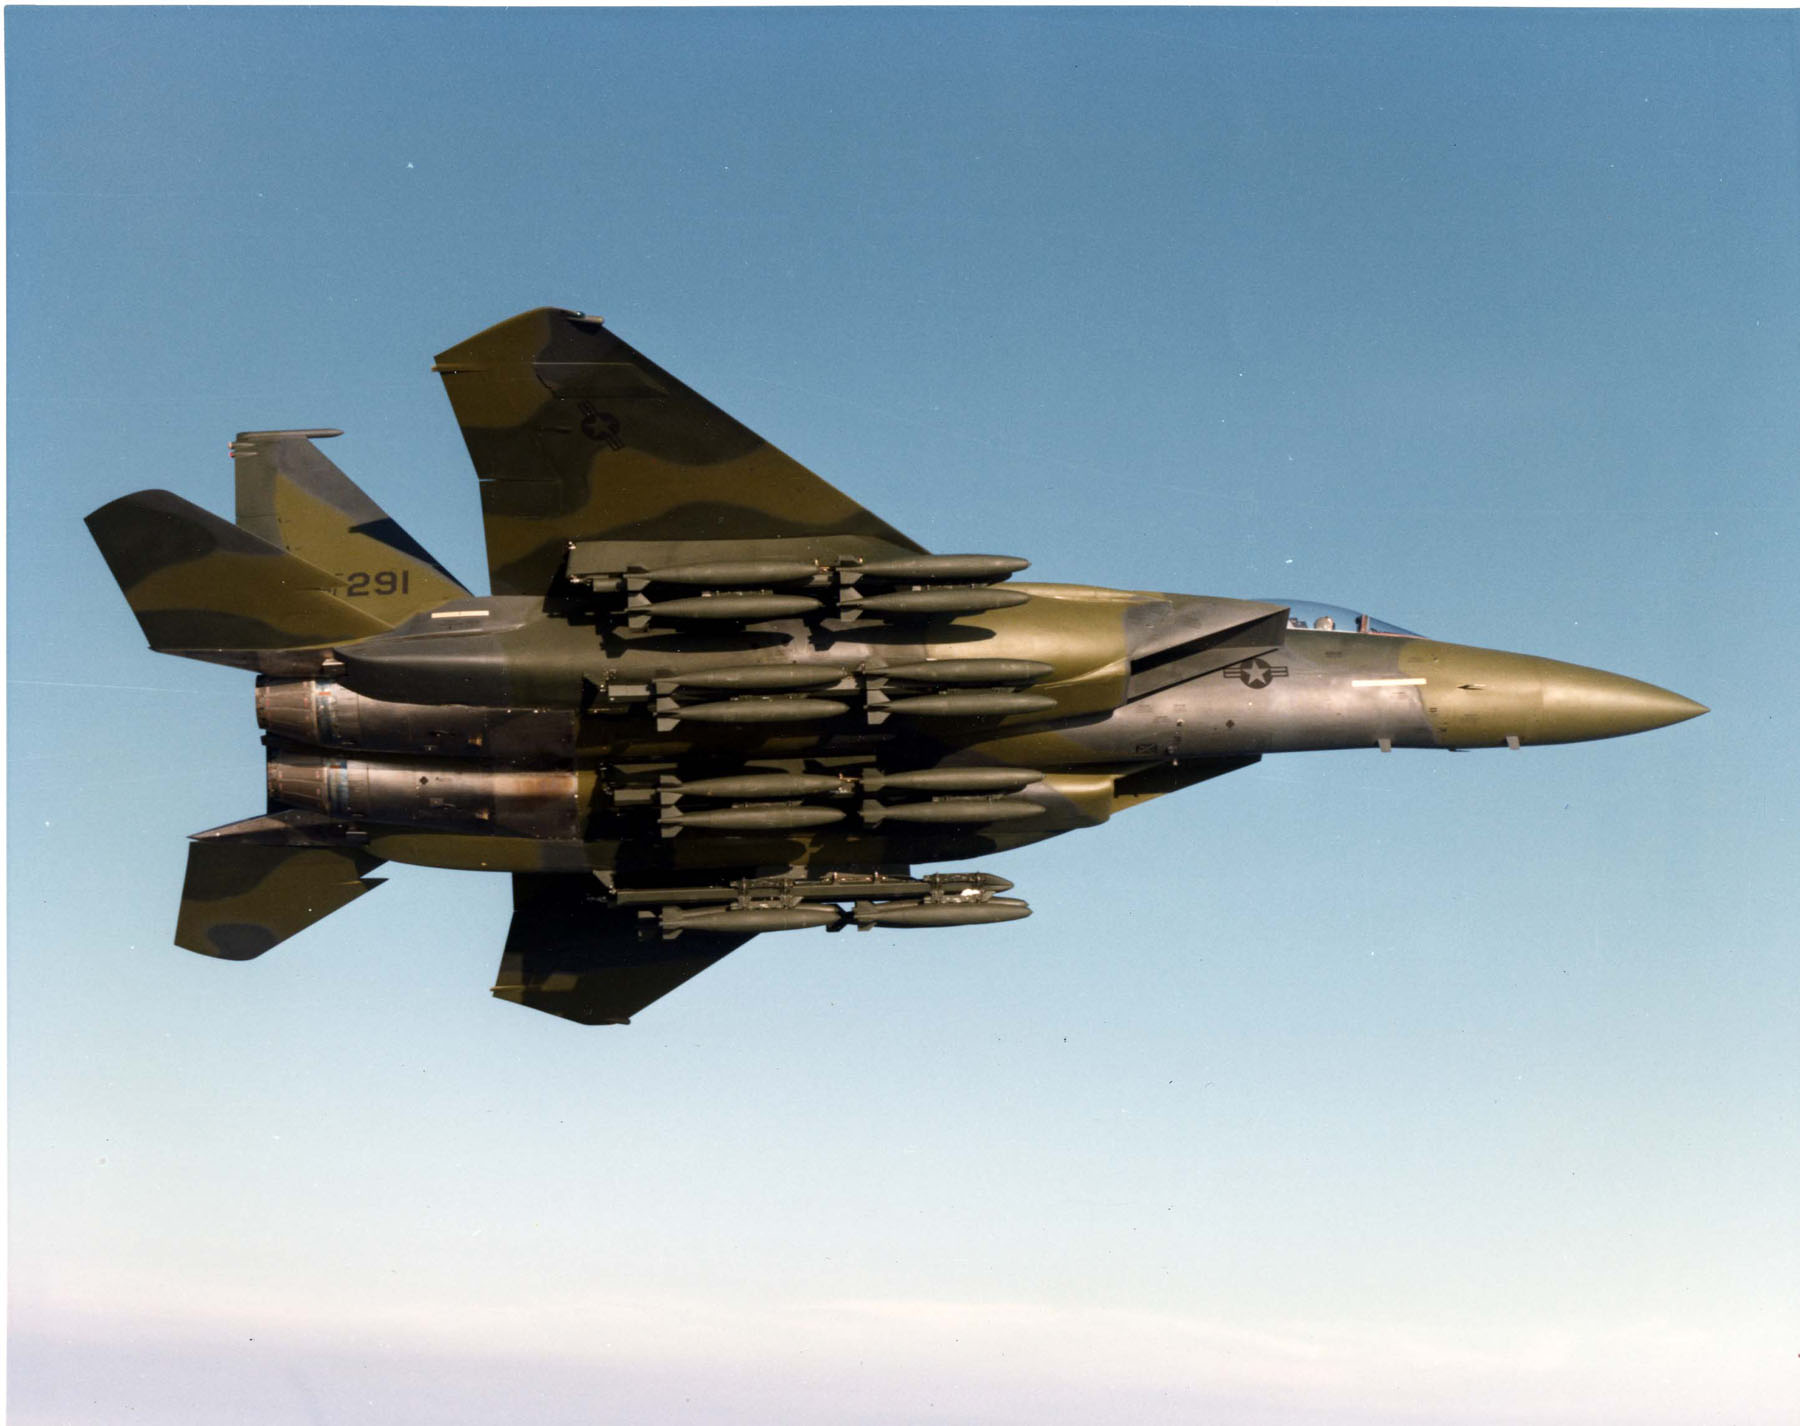 mcdonnell-douglas-f-15e-strike-eagle-prototype-modified-f-15b-4-mc-71-0291.jpg